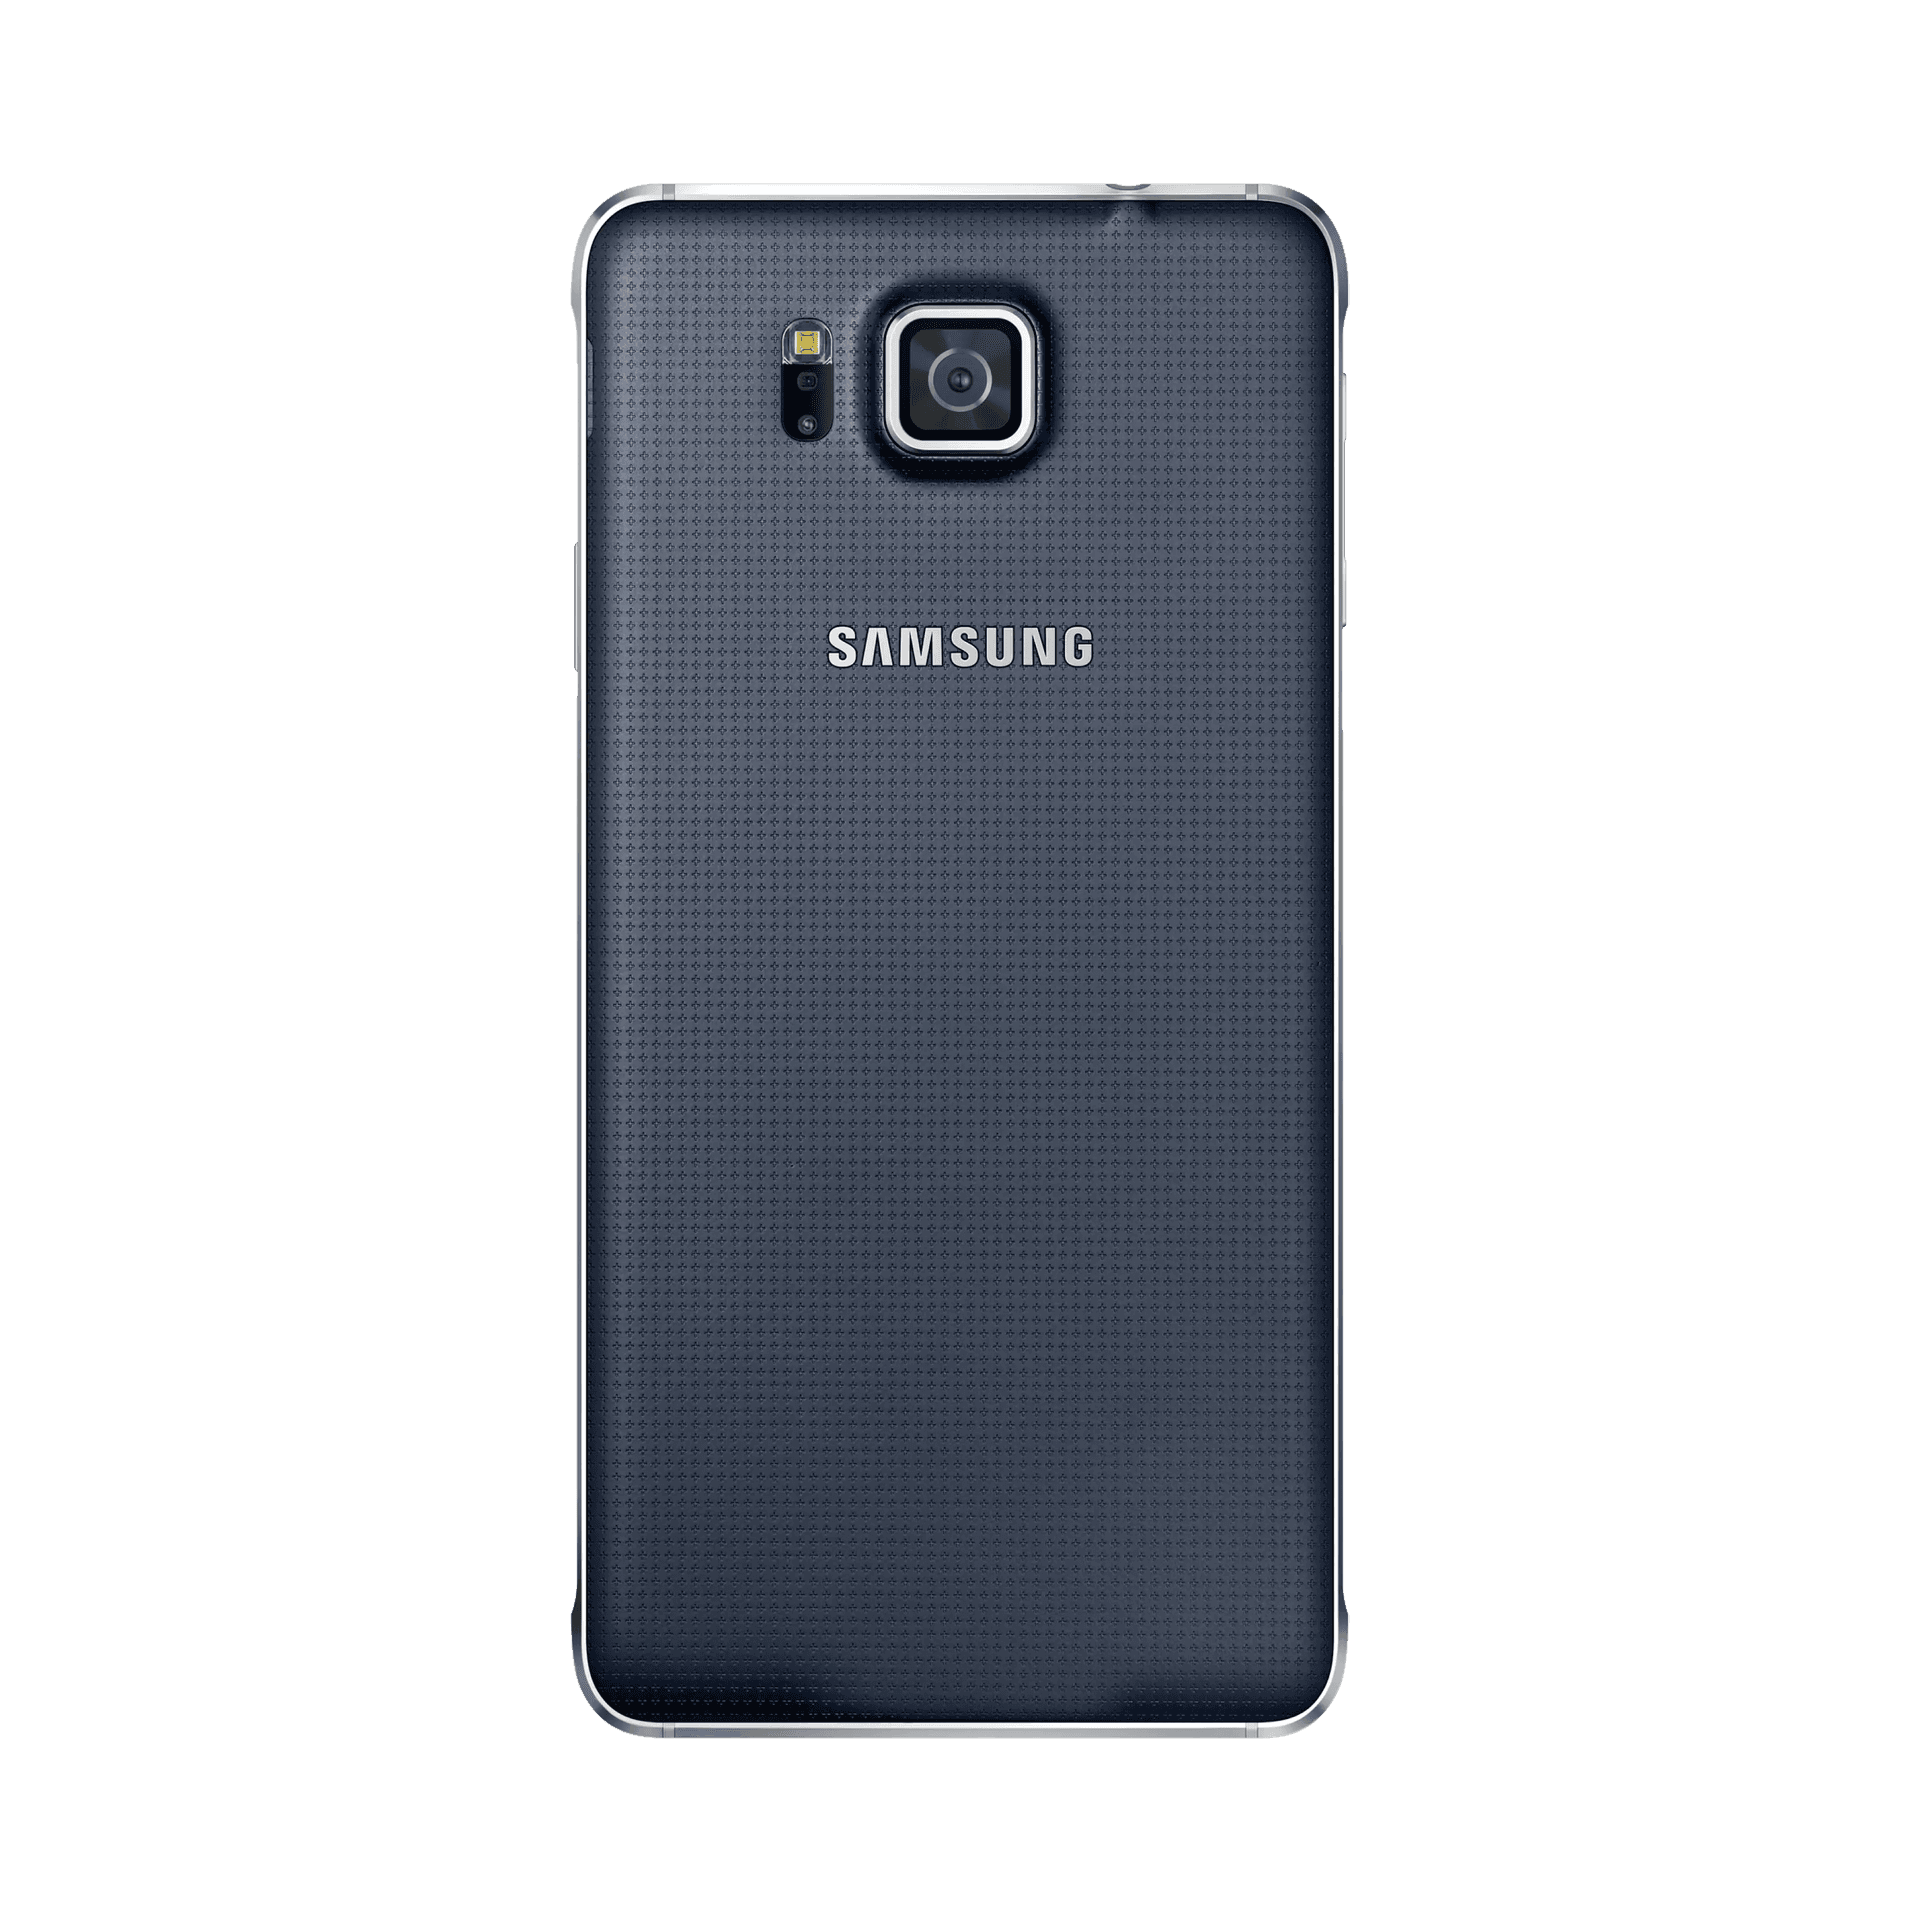 Samsung Galaxy Alpha G850 - 32 GB - Siyah